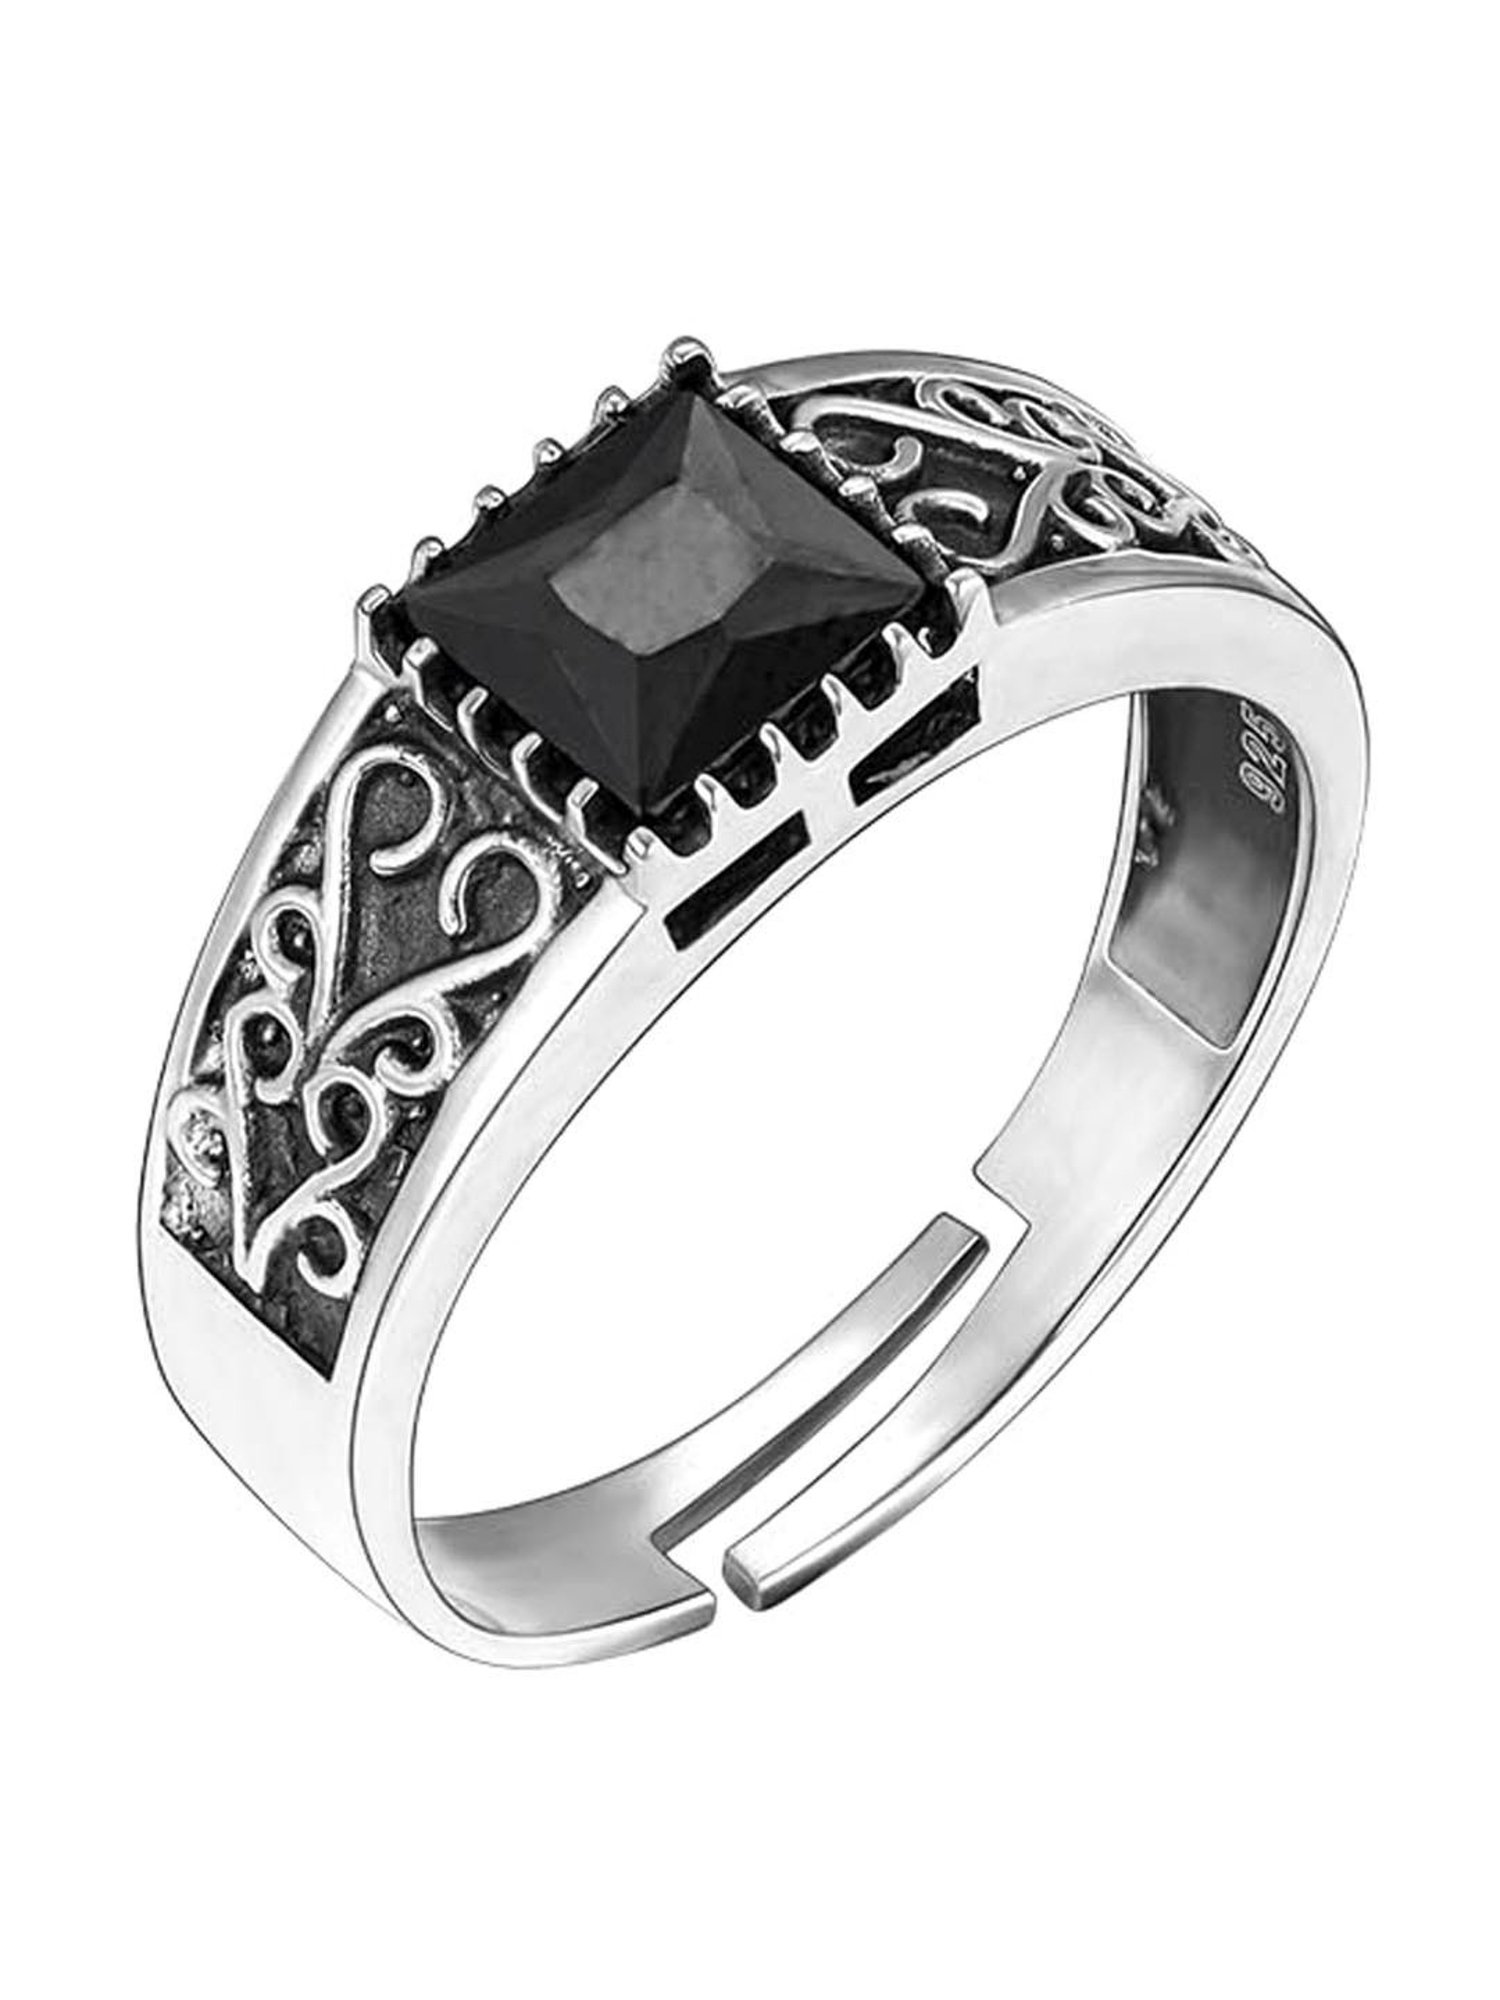 Silver Plated Adjustable Flat Ring Black-Onyx 6.25 Ratti - 55carat - 3691095